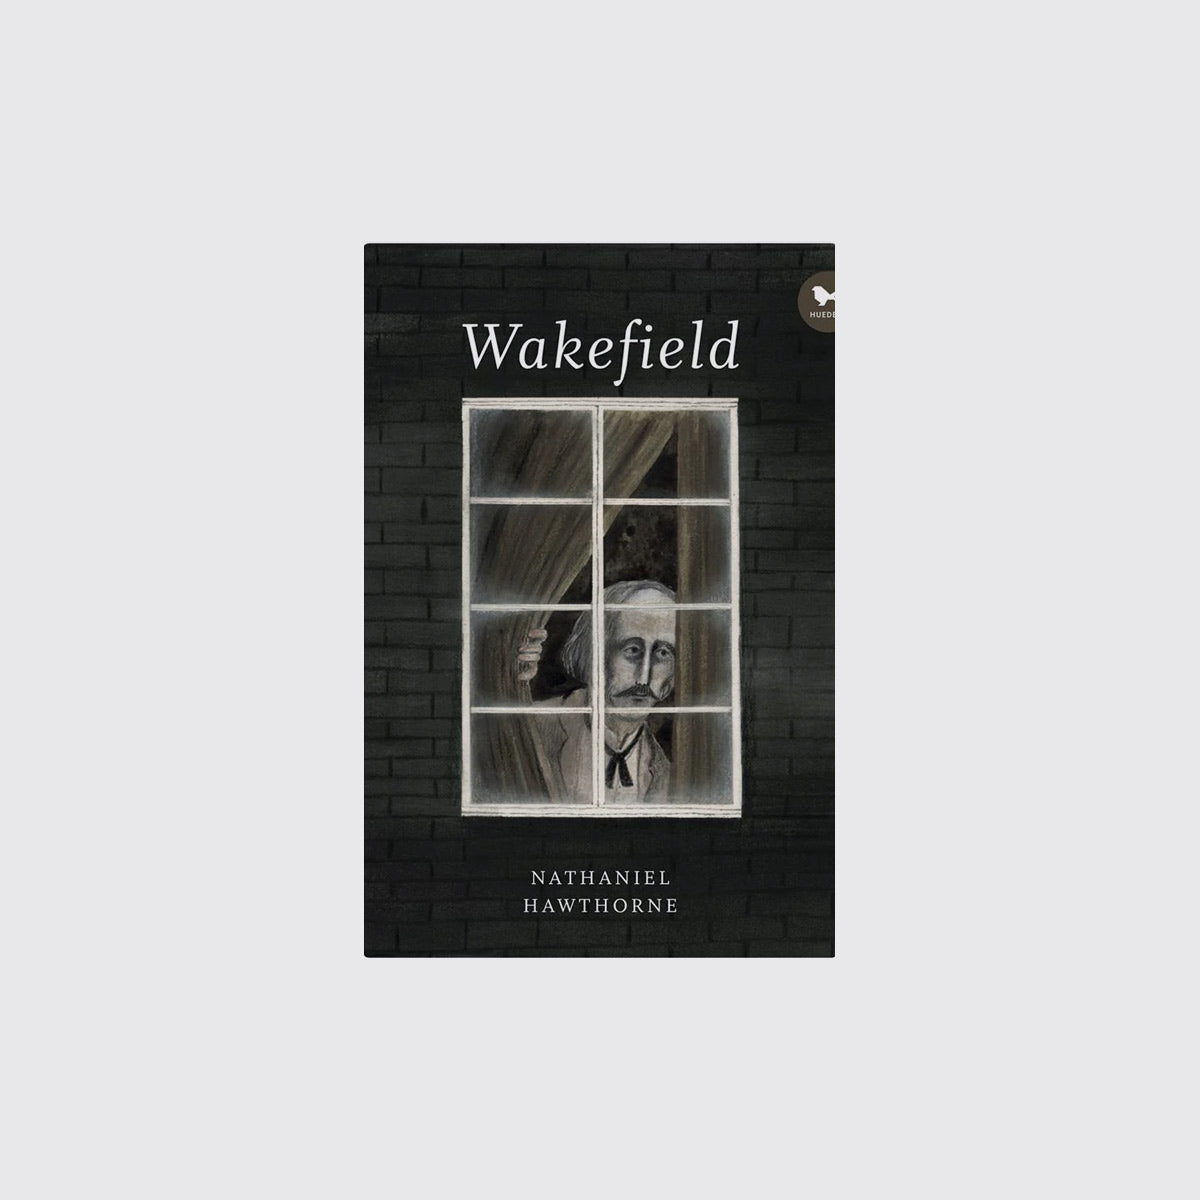 BOOK / WAKEFIELD. Nathaniel Hawthorne